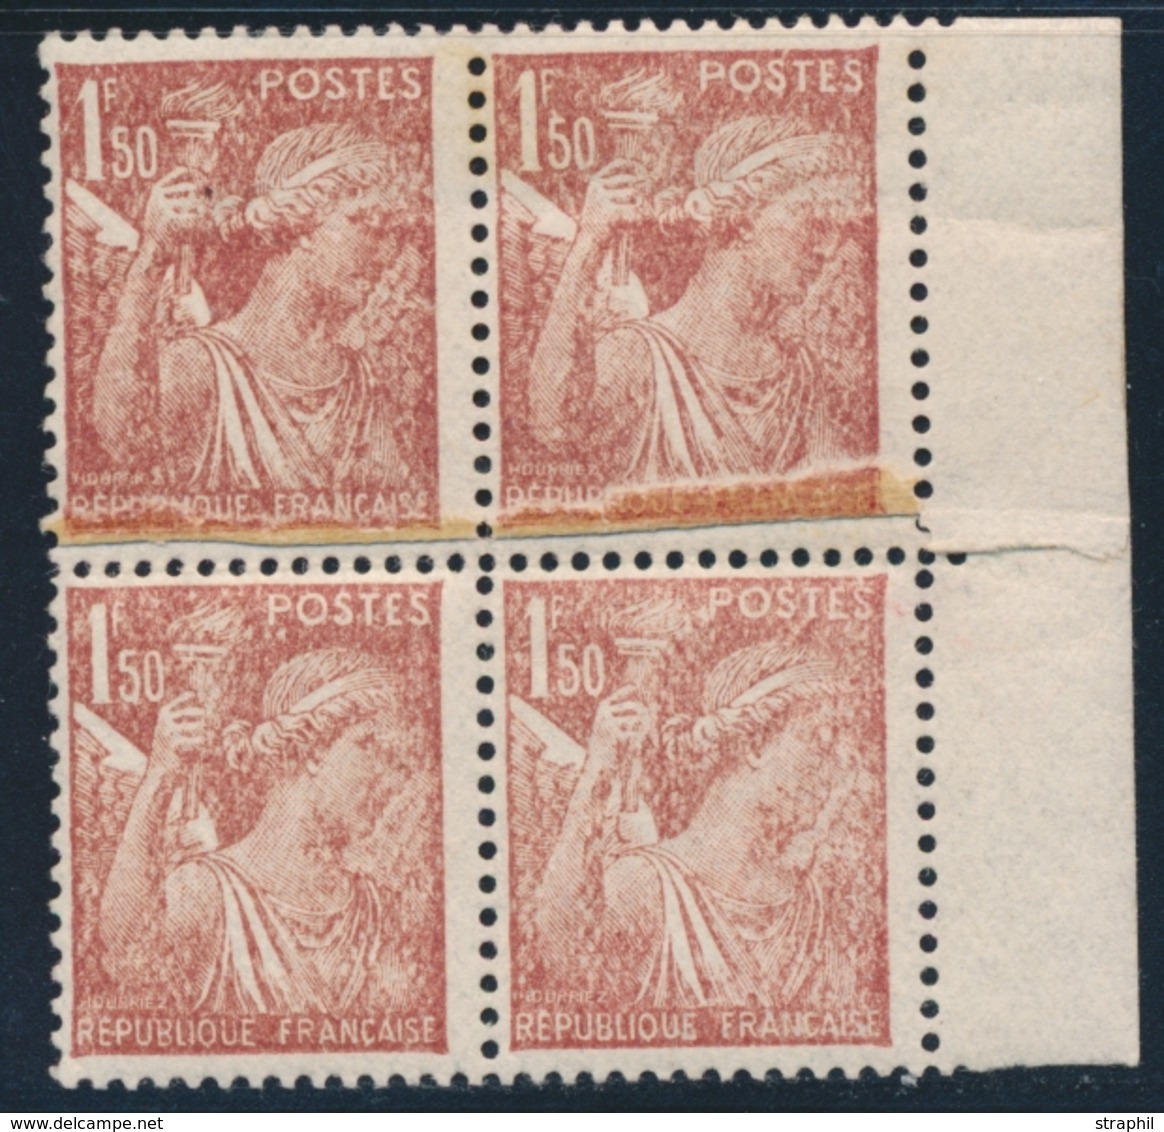 * VARIETES - * - N°652 -1f50 Brun Rge - Bloc De 4 BdF - 2 Ex. Impr. S/Raccord - 2ex. Impr. Défectueuse - TB - Unused Stamps